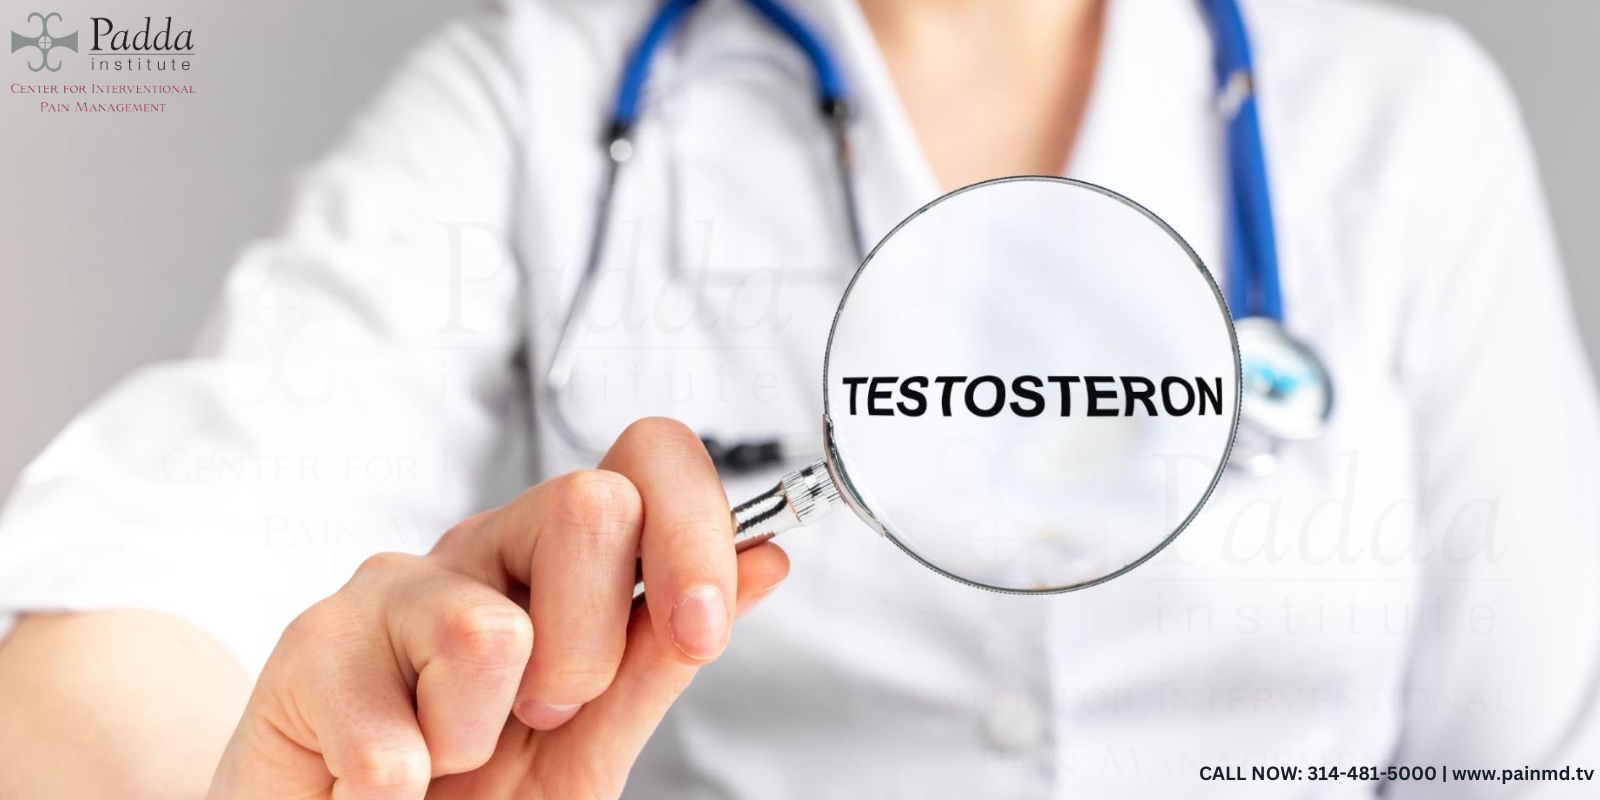 Testosteron May Promote "Cuddling and Prosocial Behavior ESTOSTERONE MAY PROMOTE “CUDDLING” OR “PROSOCIAL BEHAVIOR”